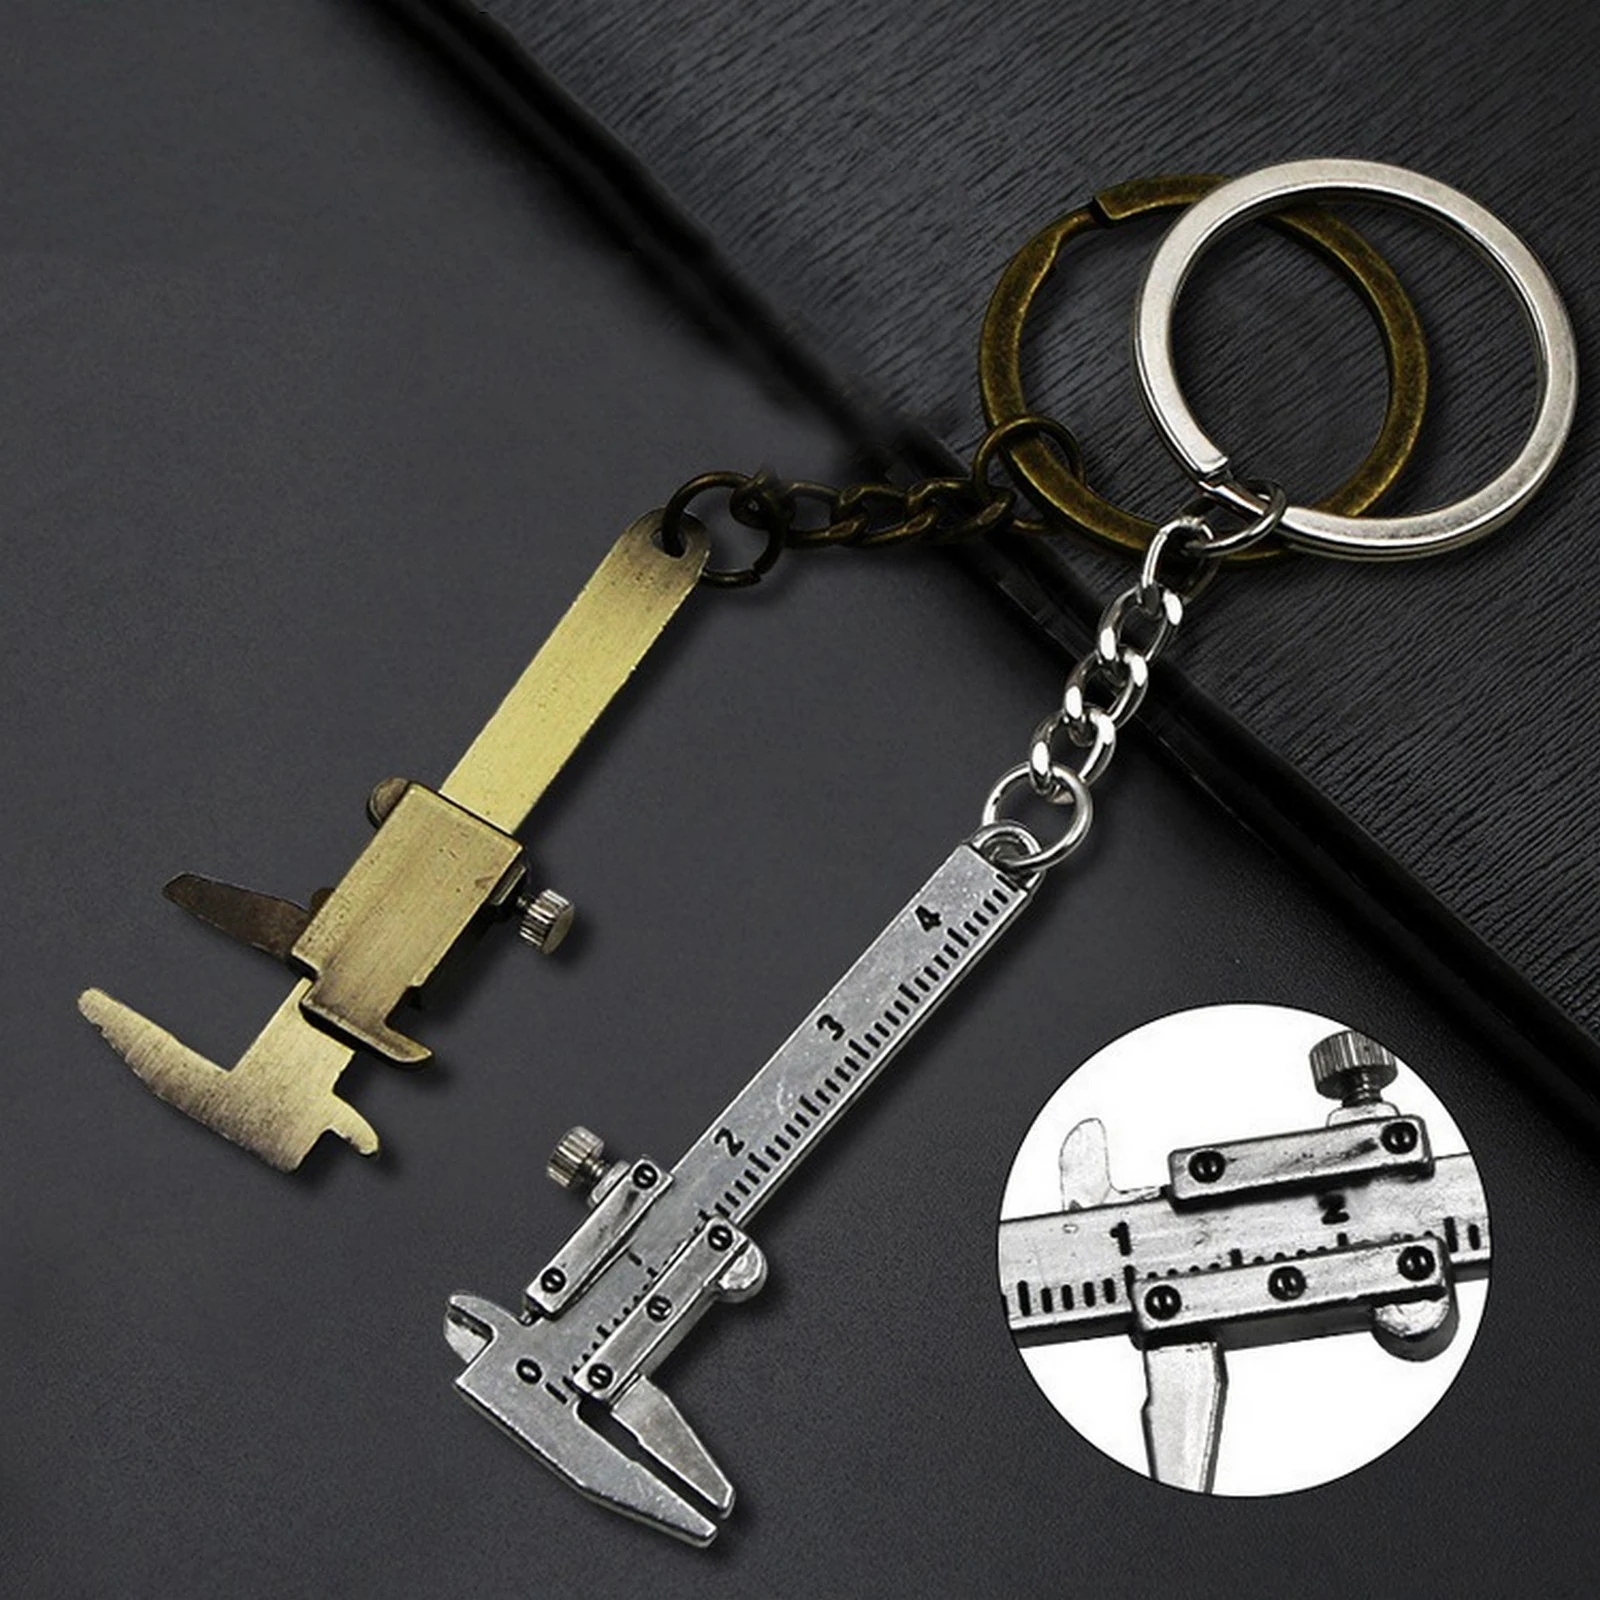 Ruler Vernier Calipers Keychain Decoration Zinc Alloy Retro Tool Key Pendant LI 